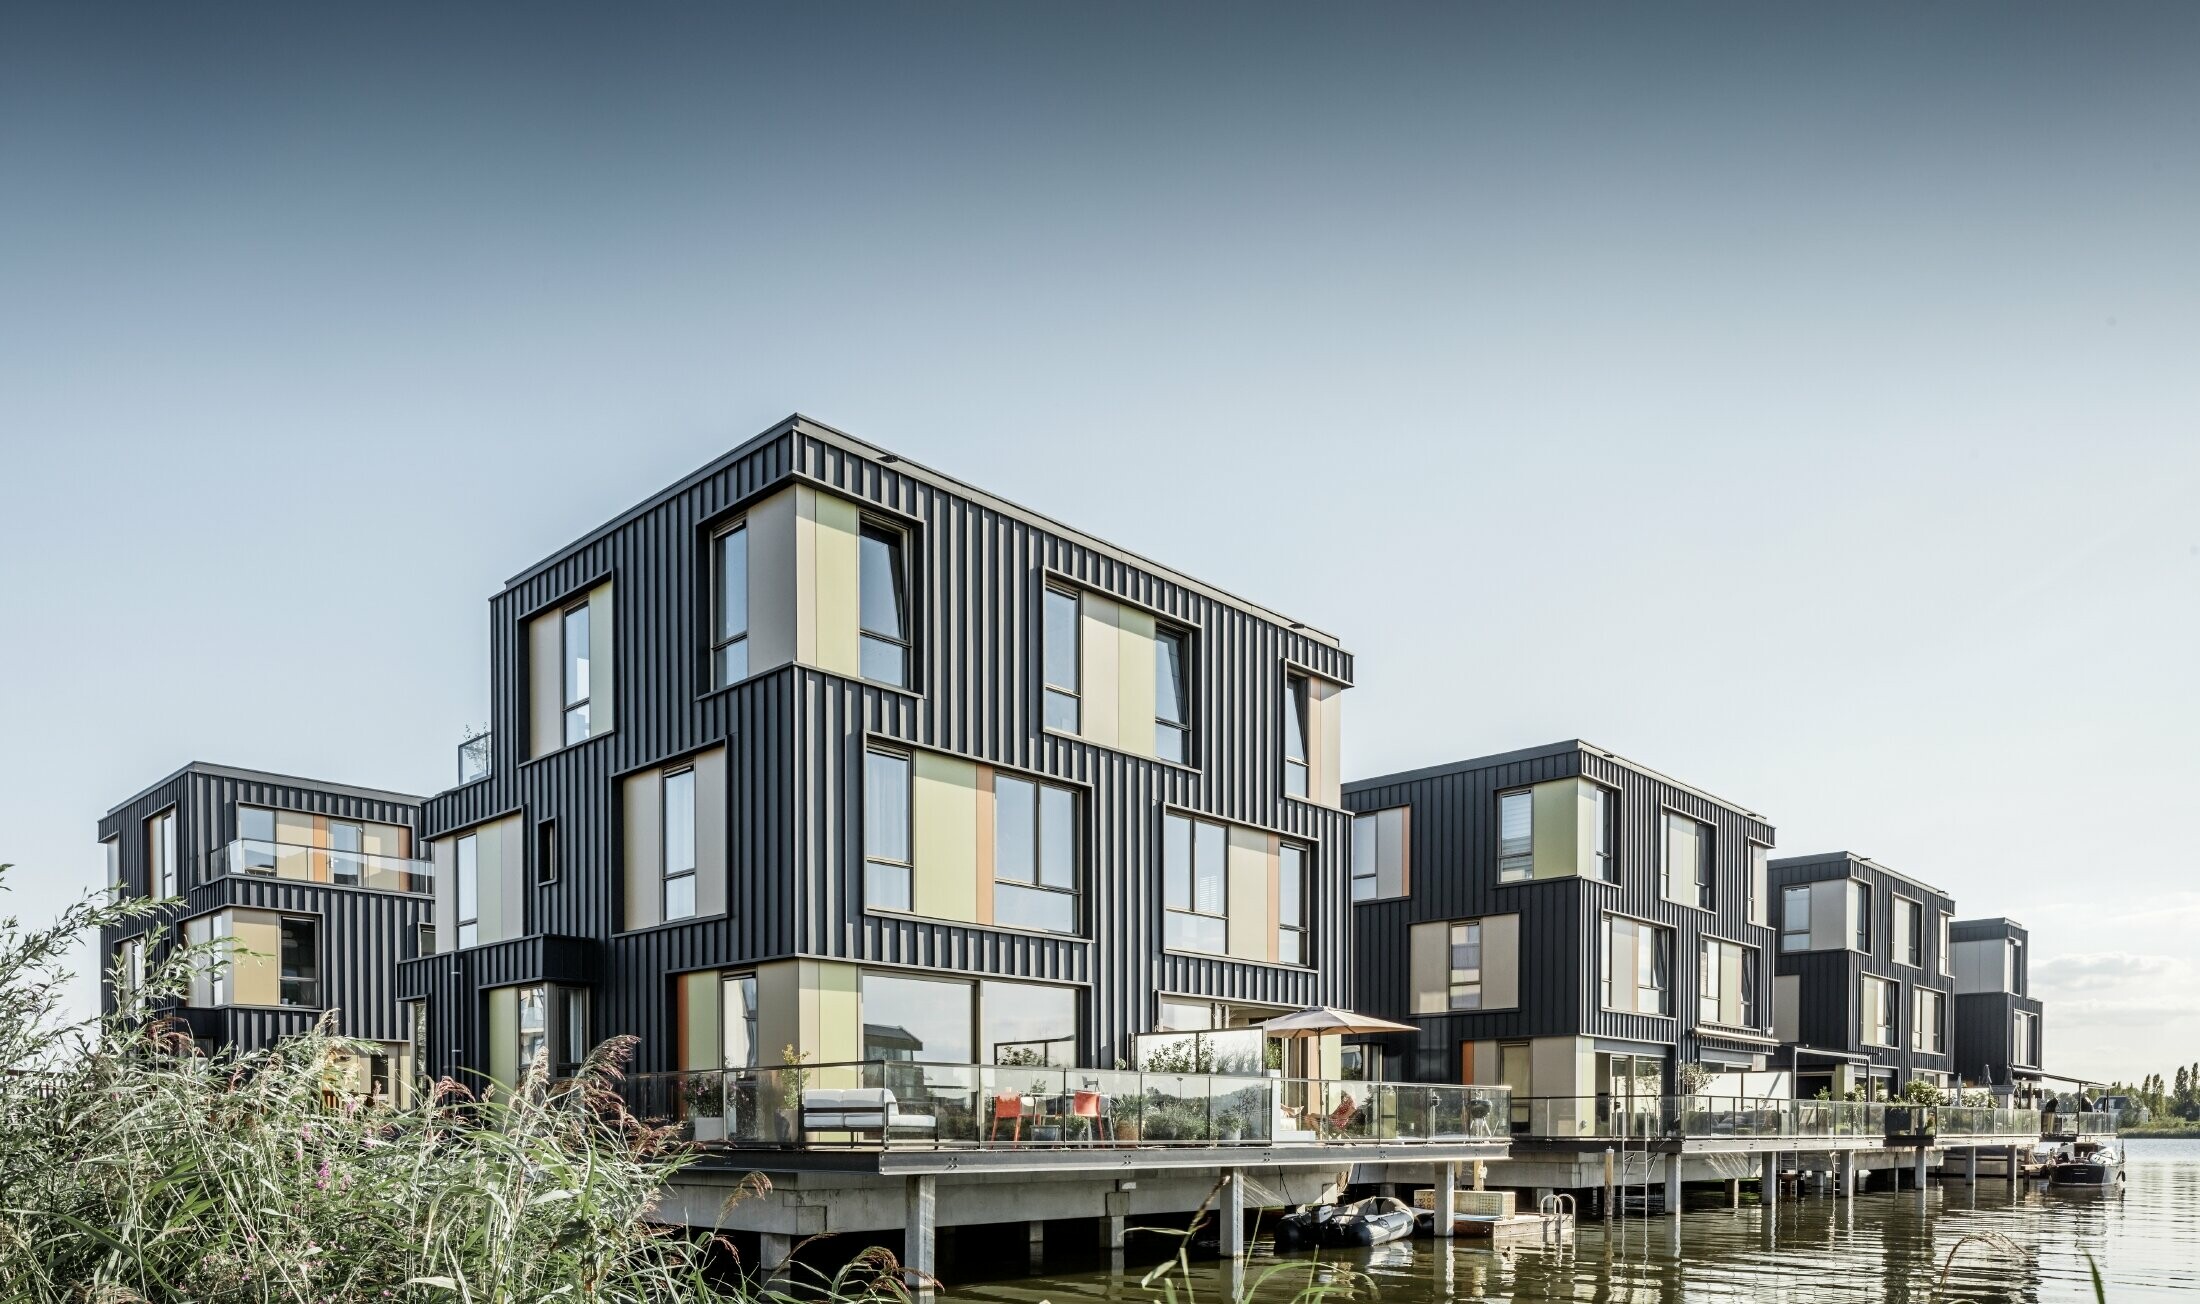 Nyt boligområde med tofamilieshuse ved en sø i Amsterdam. Husene er beklædt med Prefalz fra PREFA i P.10 antracit.